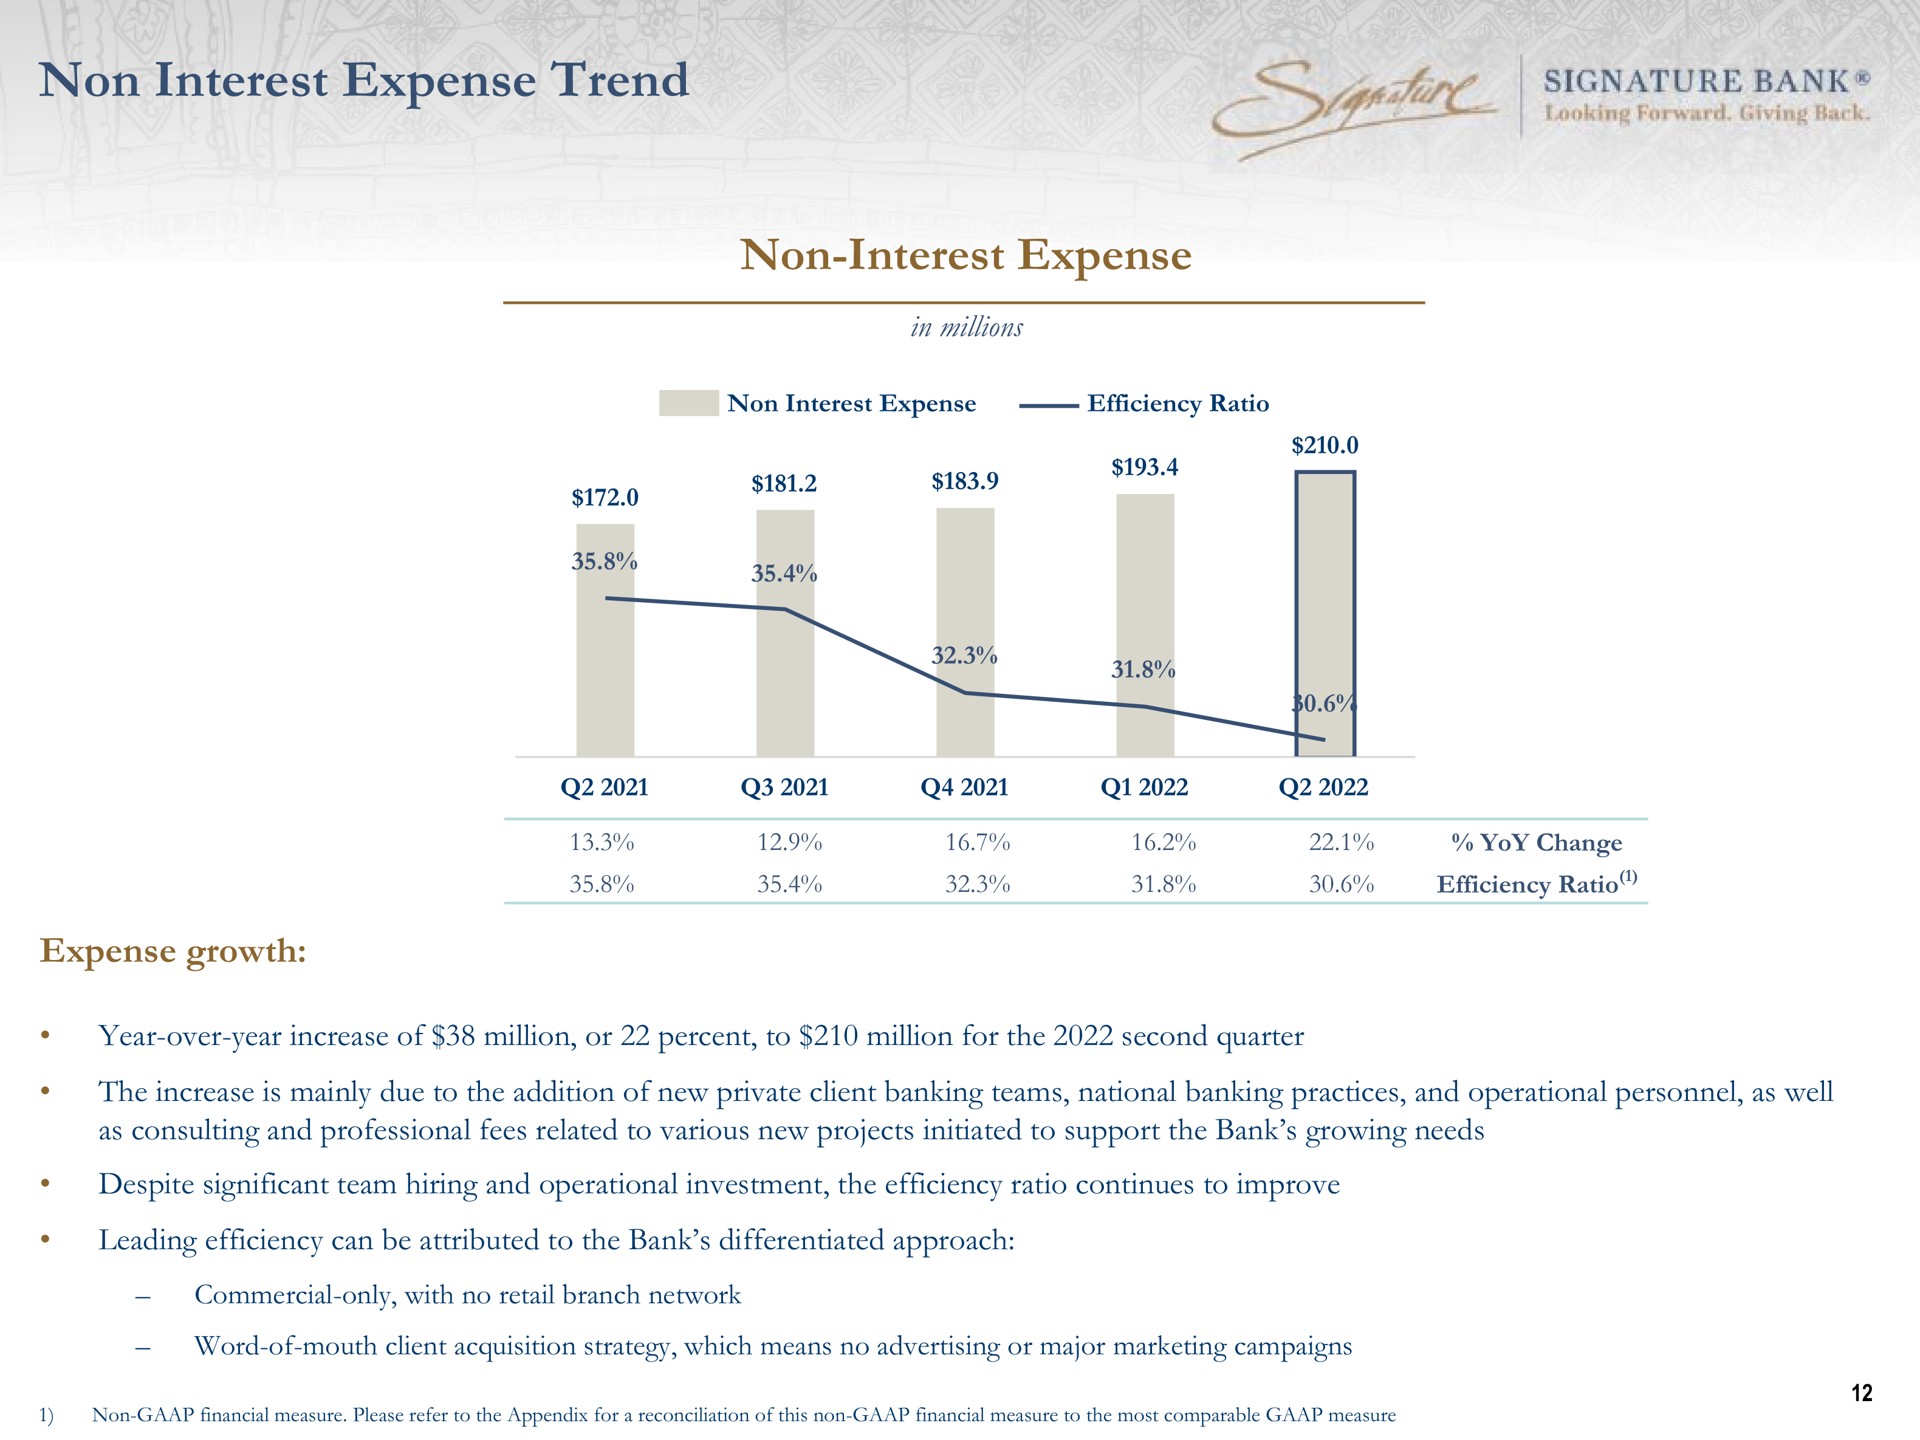 non interest expense trend non interest expense signature bank growth | Signature Bank